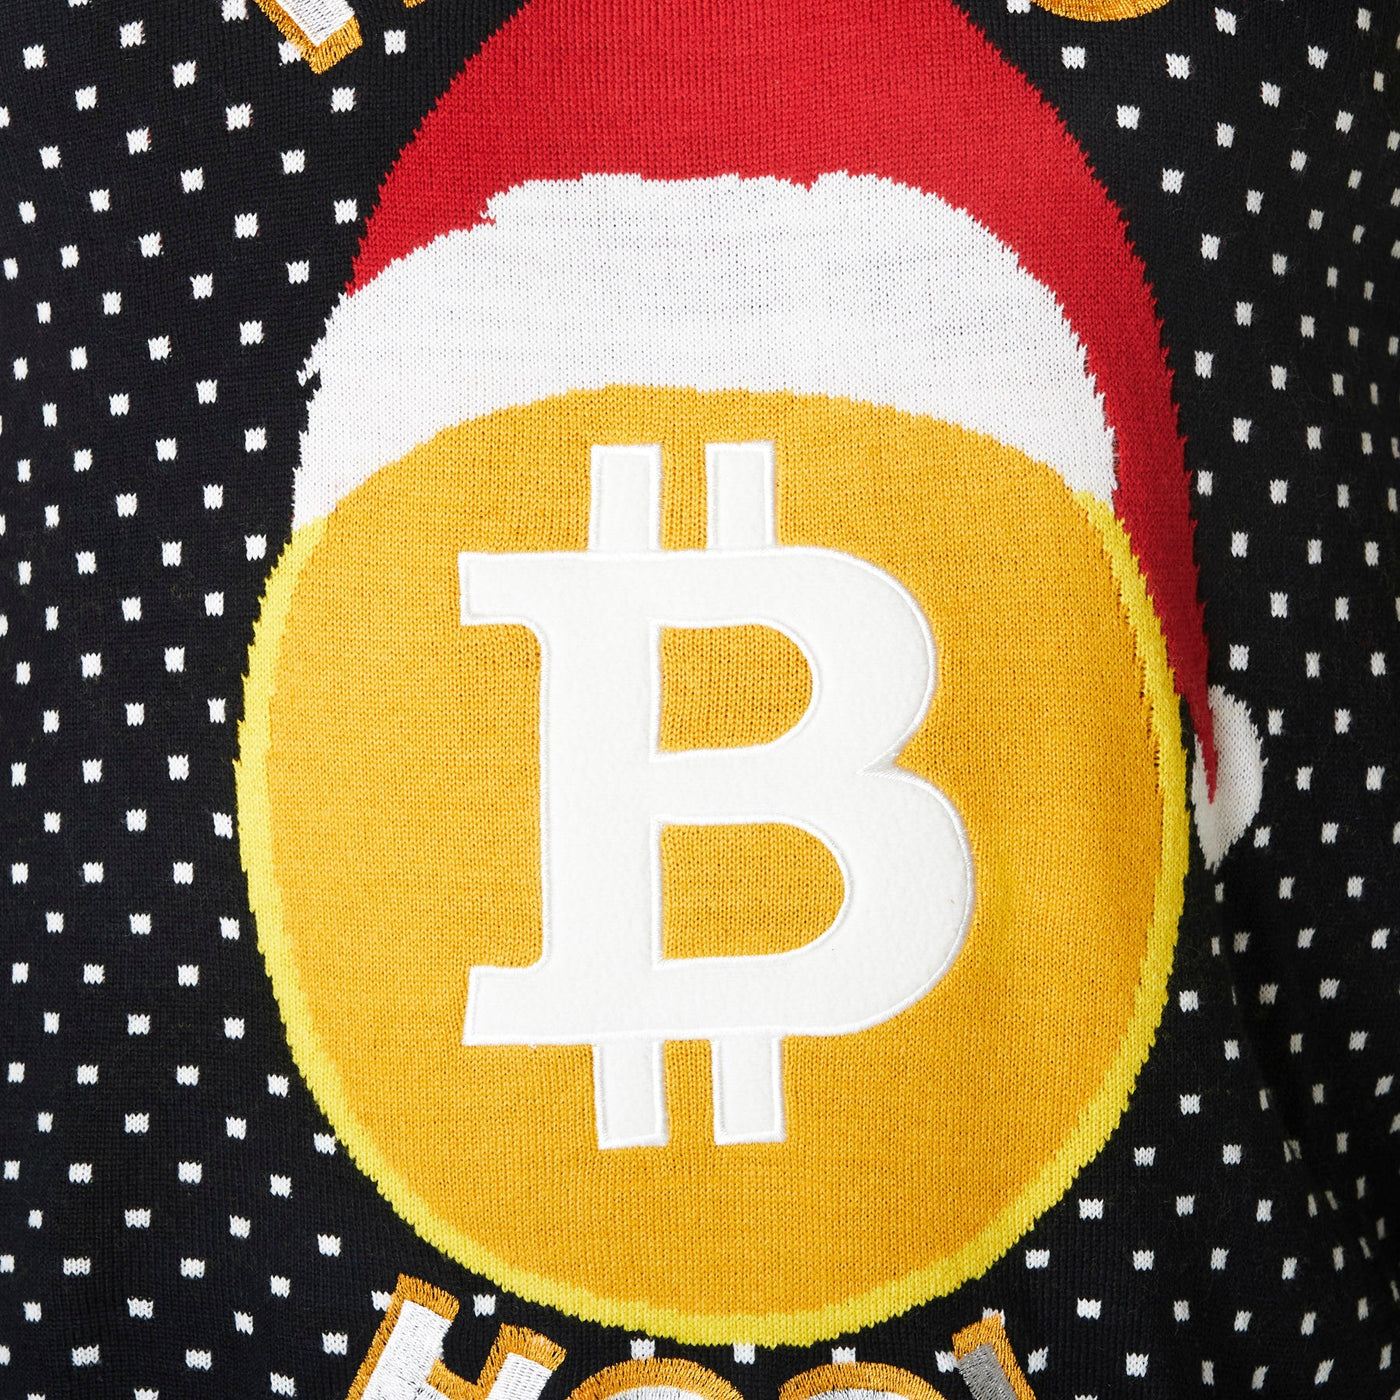 Women's Bitcoin Christmas Sweater